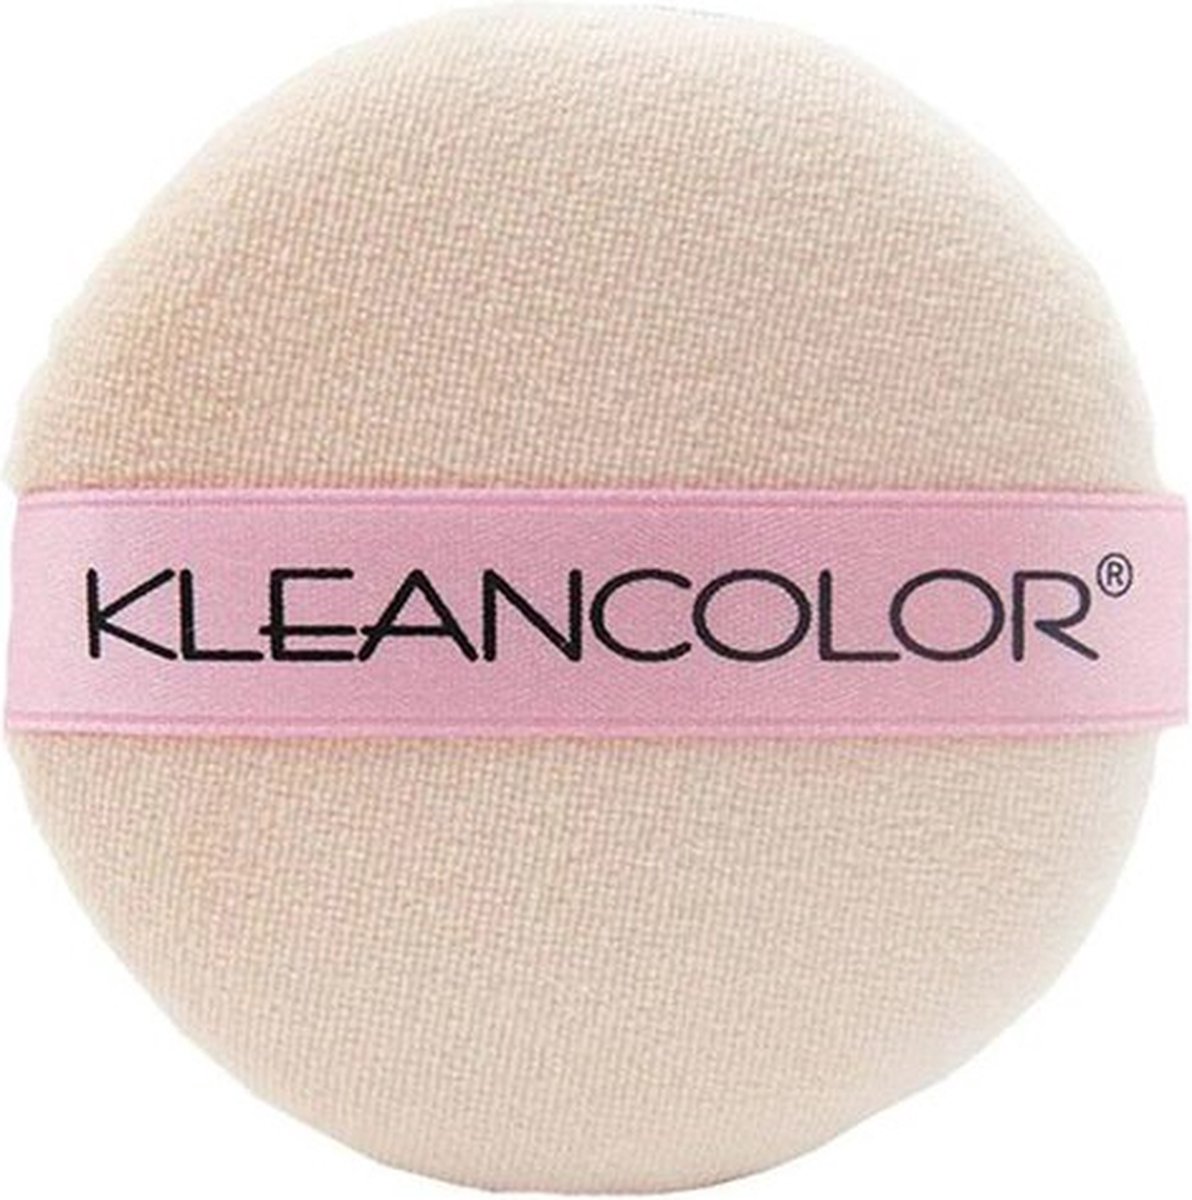 Kleancolor Beauty Care Cotton Powder Puff - Poederdonsje - Poeder Spons - Make up spons - Poeder Puff - 1 stuk - Diameter 8 cm